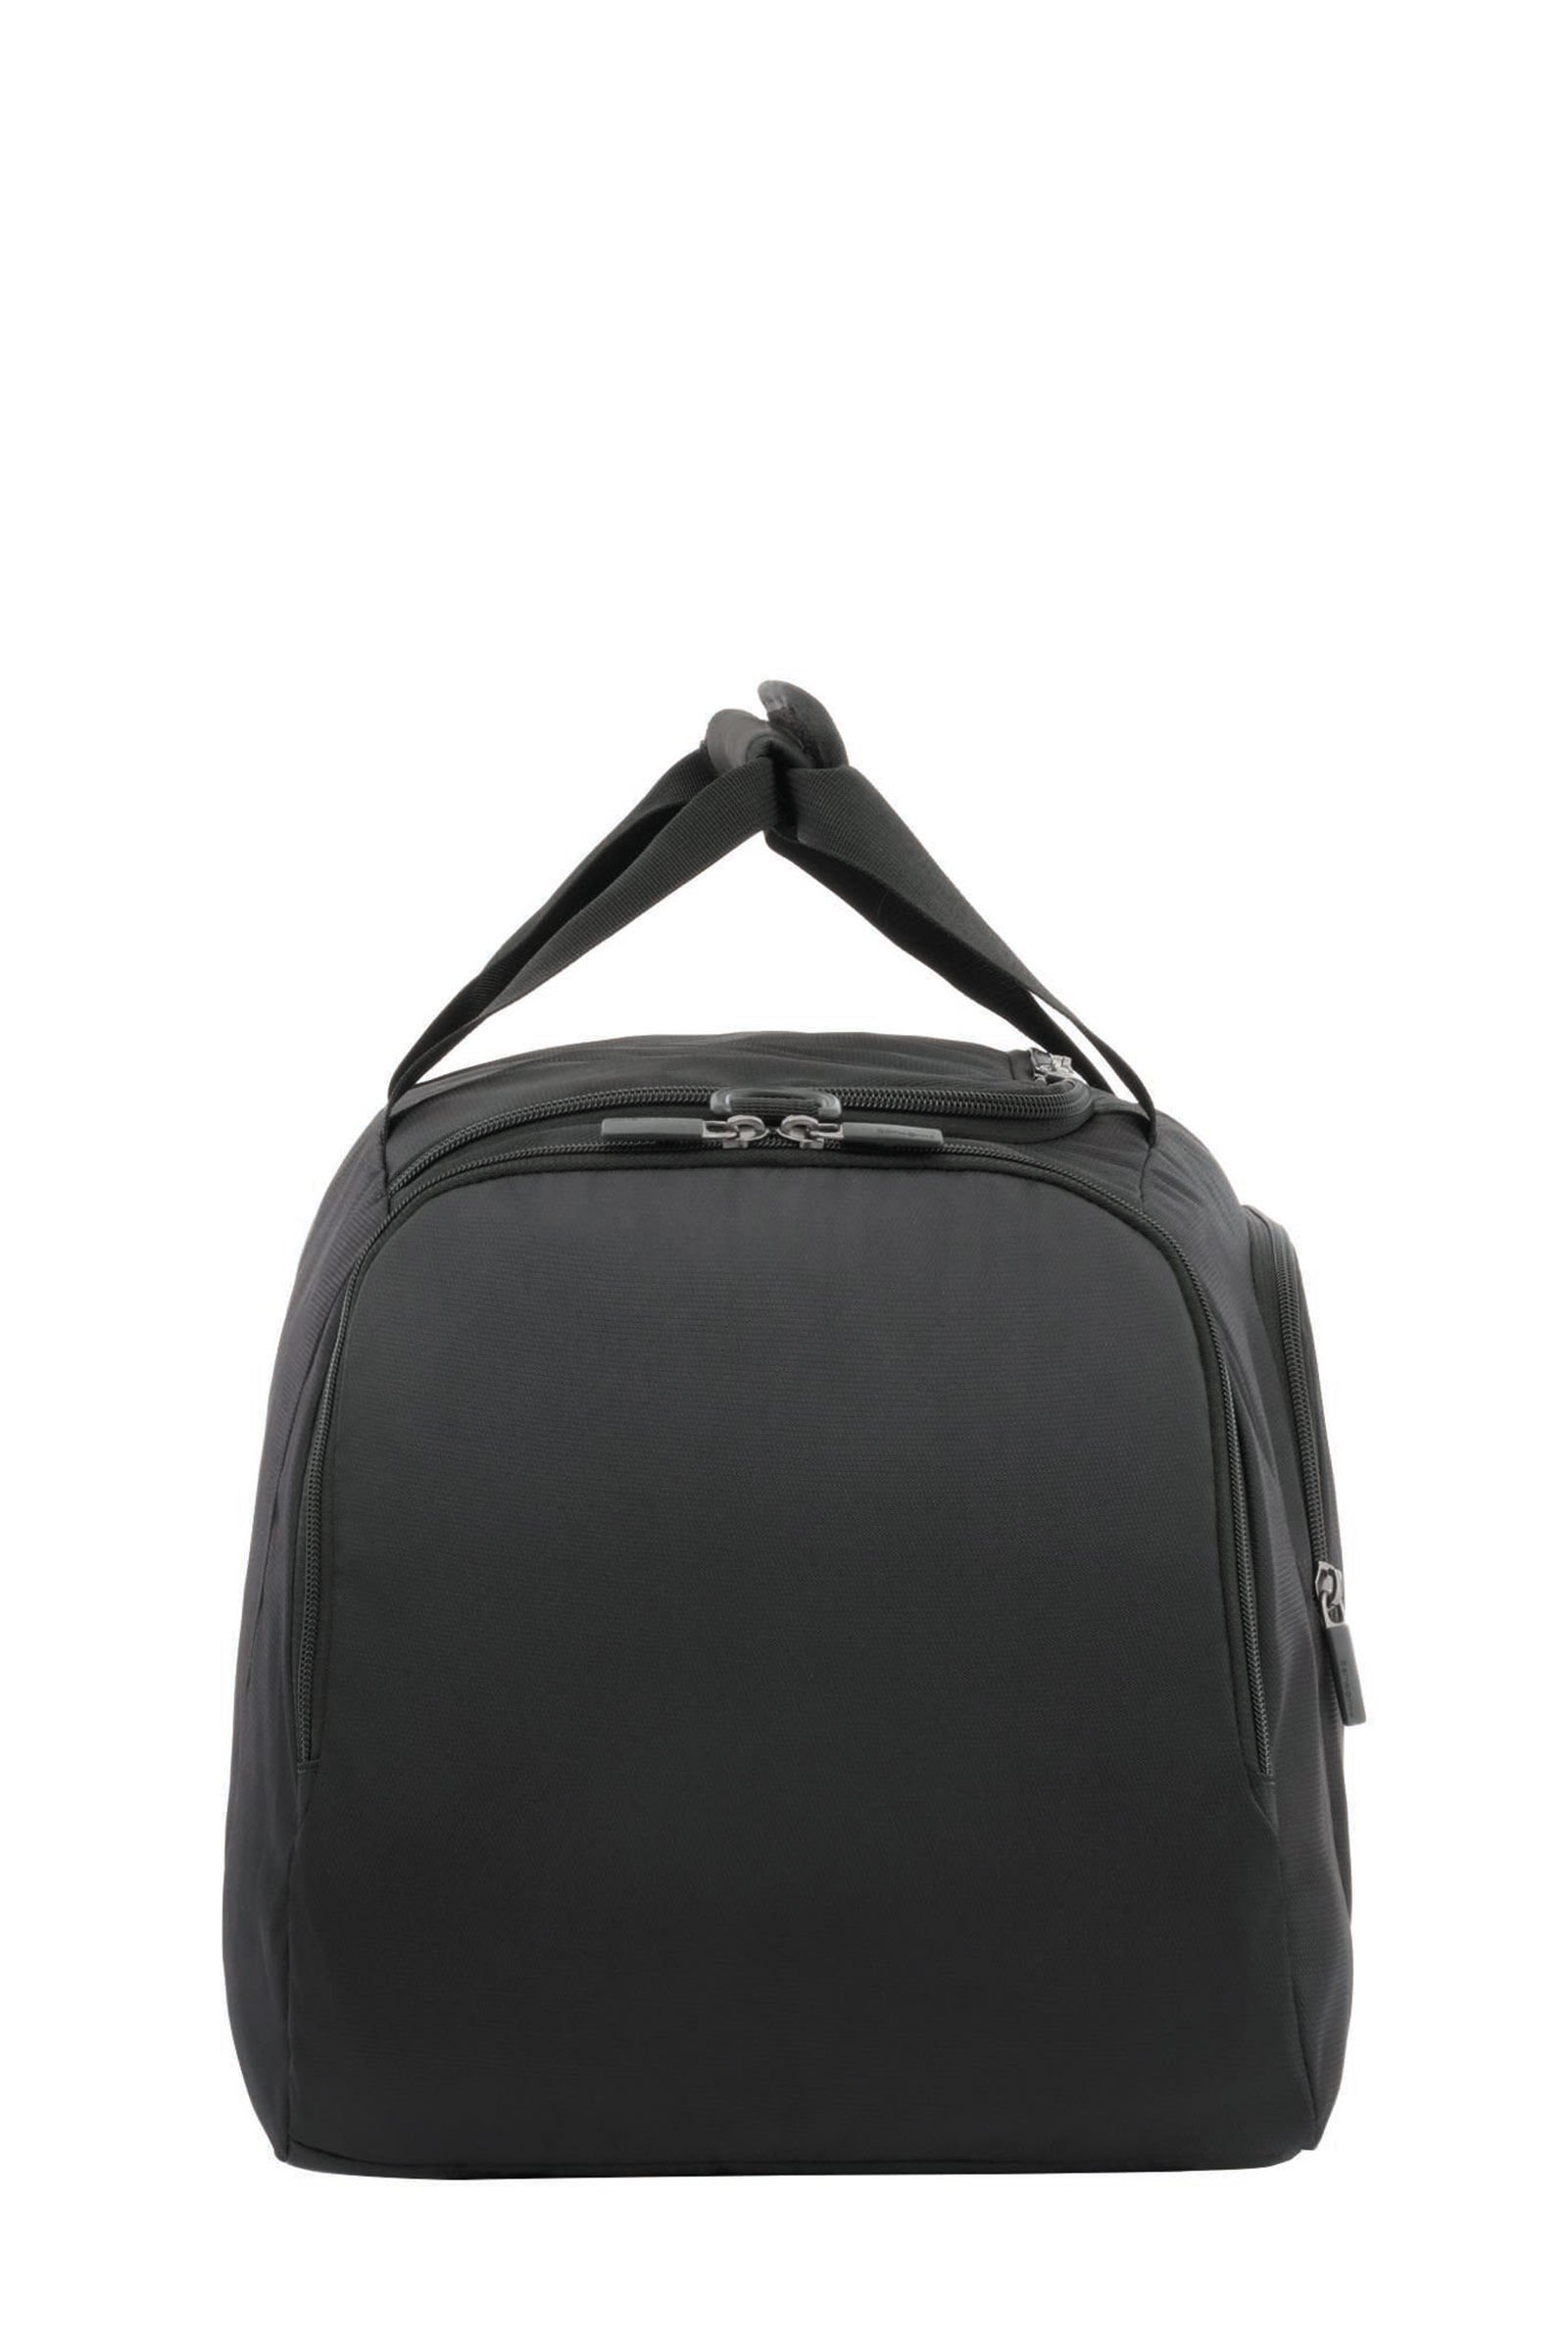 Samsonite Sonora 82 cm Wheeled Duffle Bag - Black by Samsonite Luggage  (128096-1041)